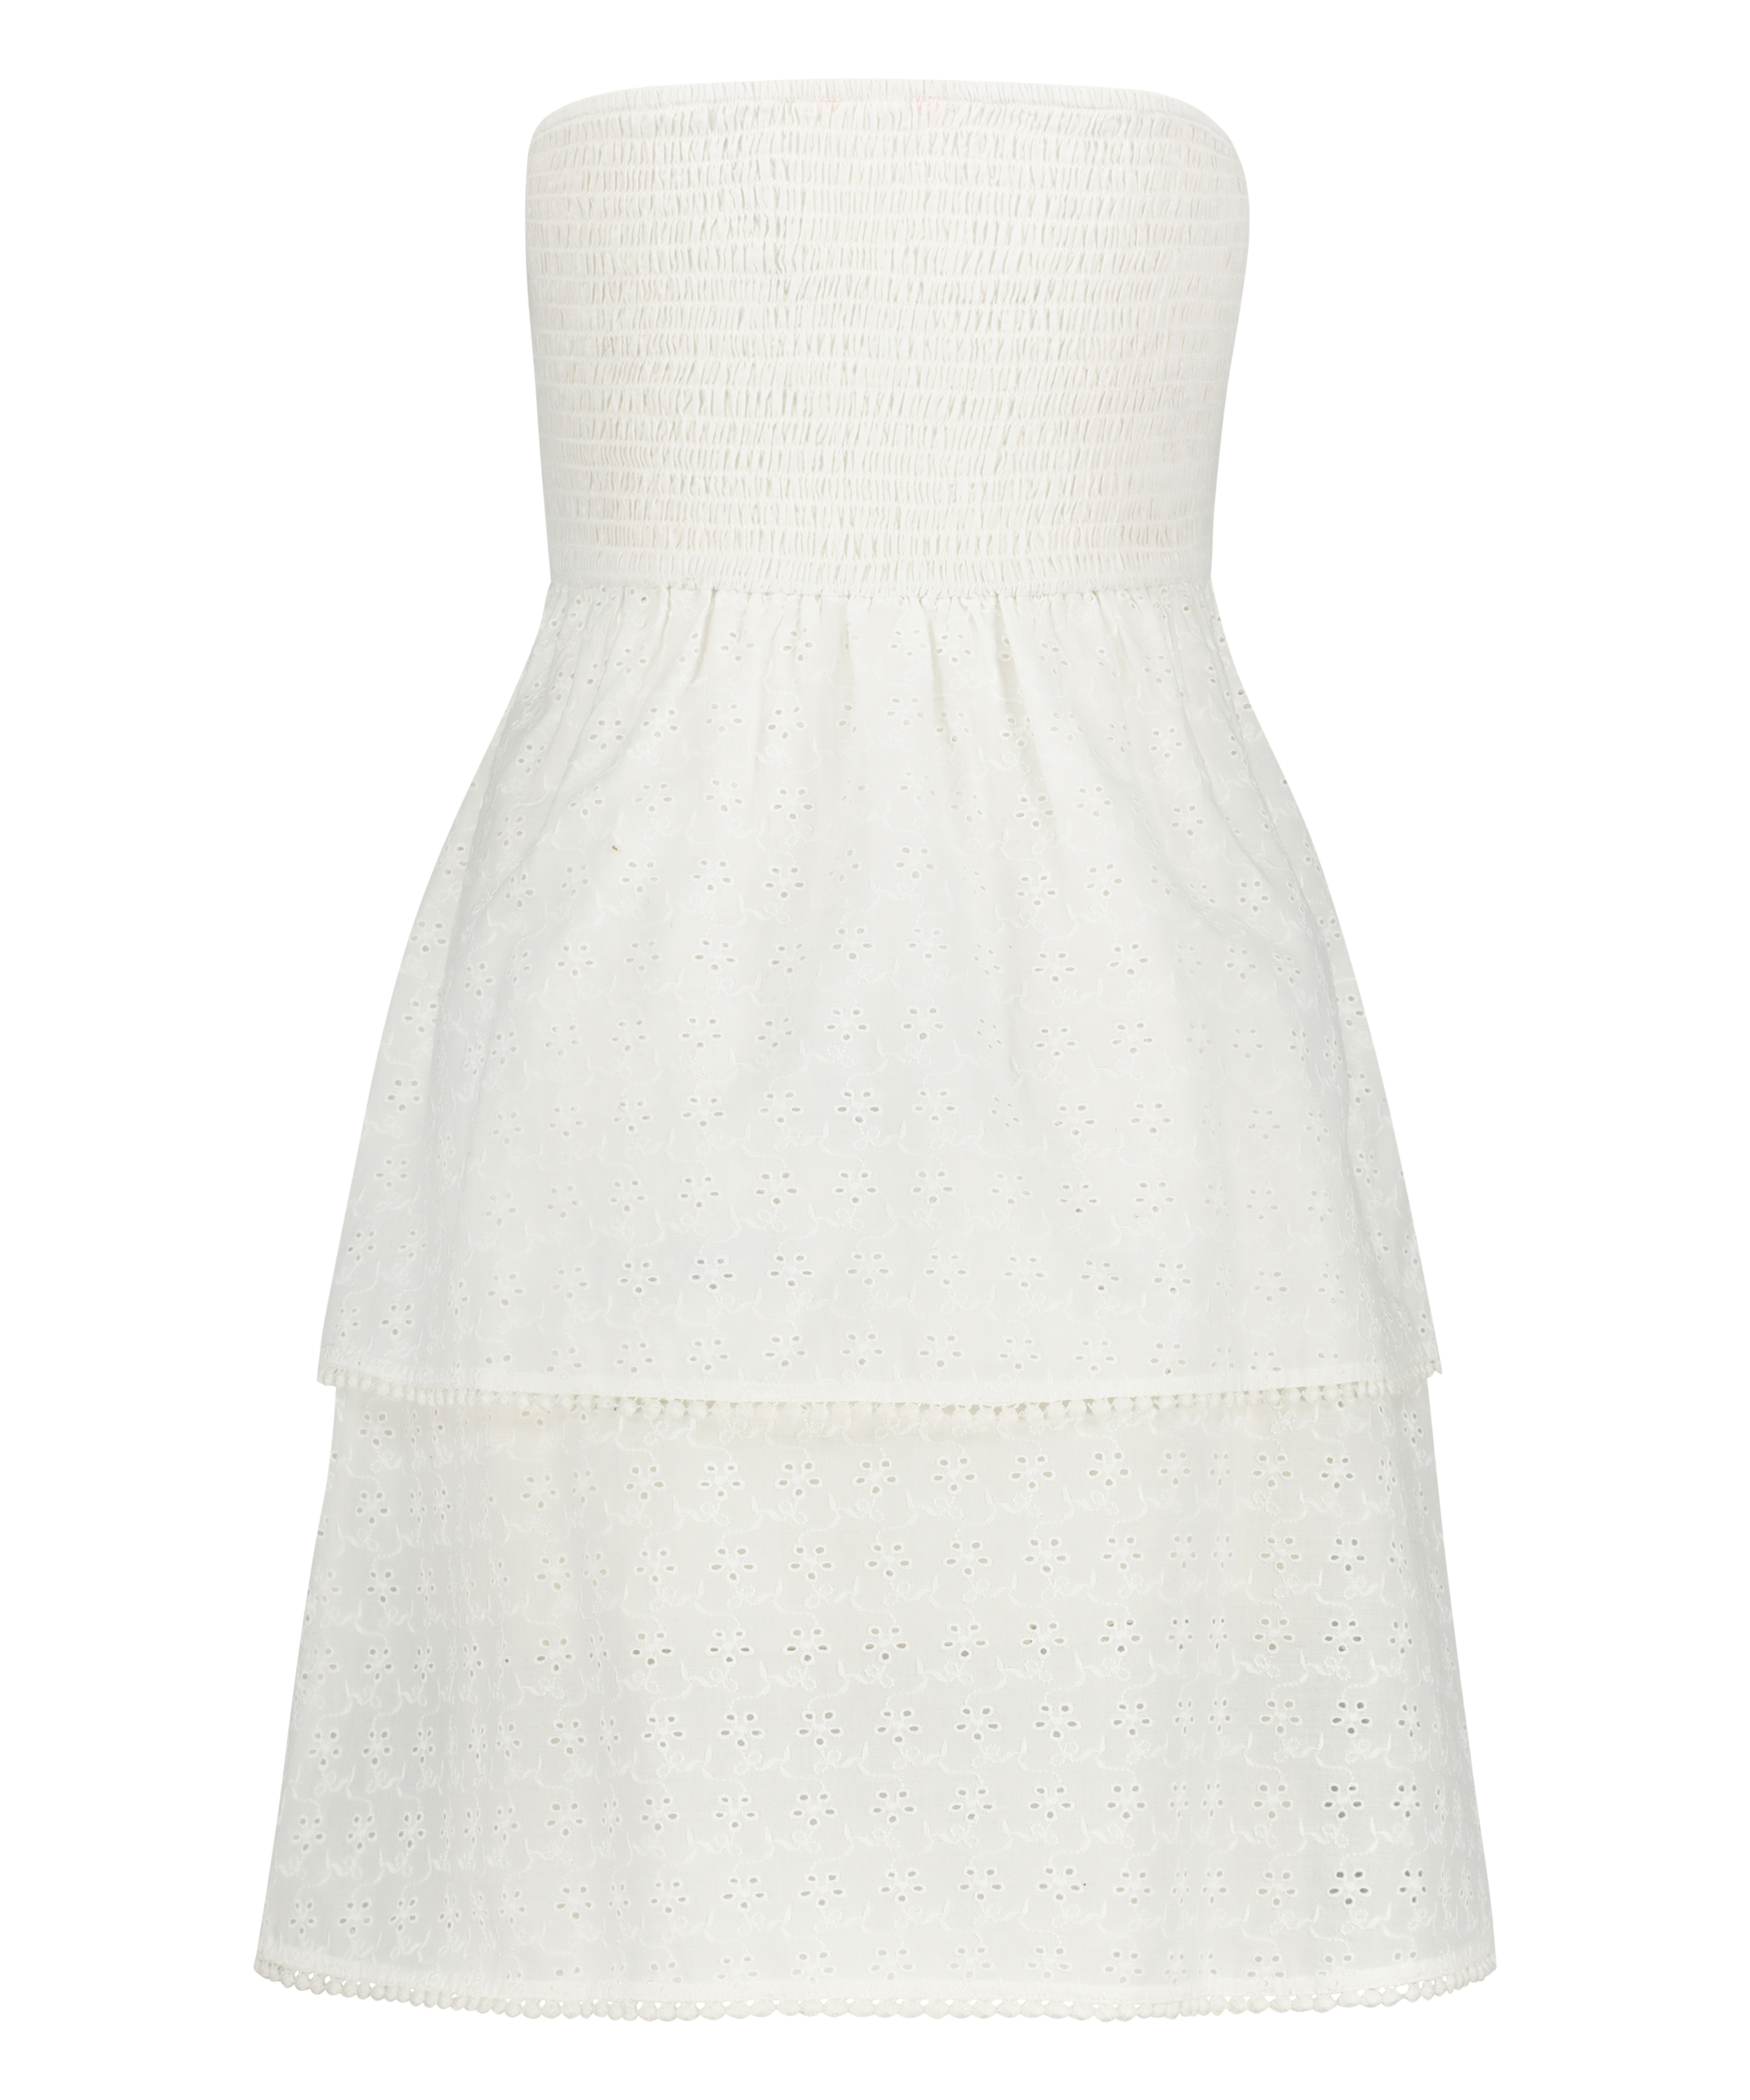 Myla beach dress, White, main